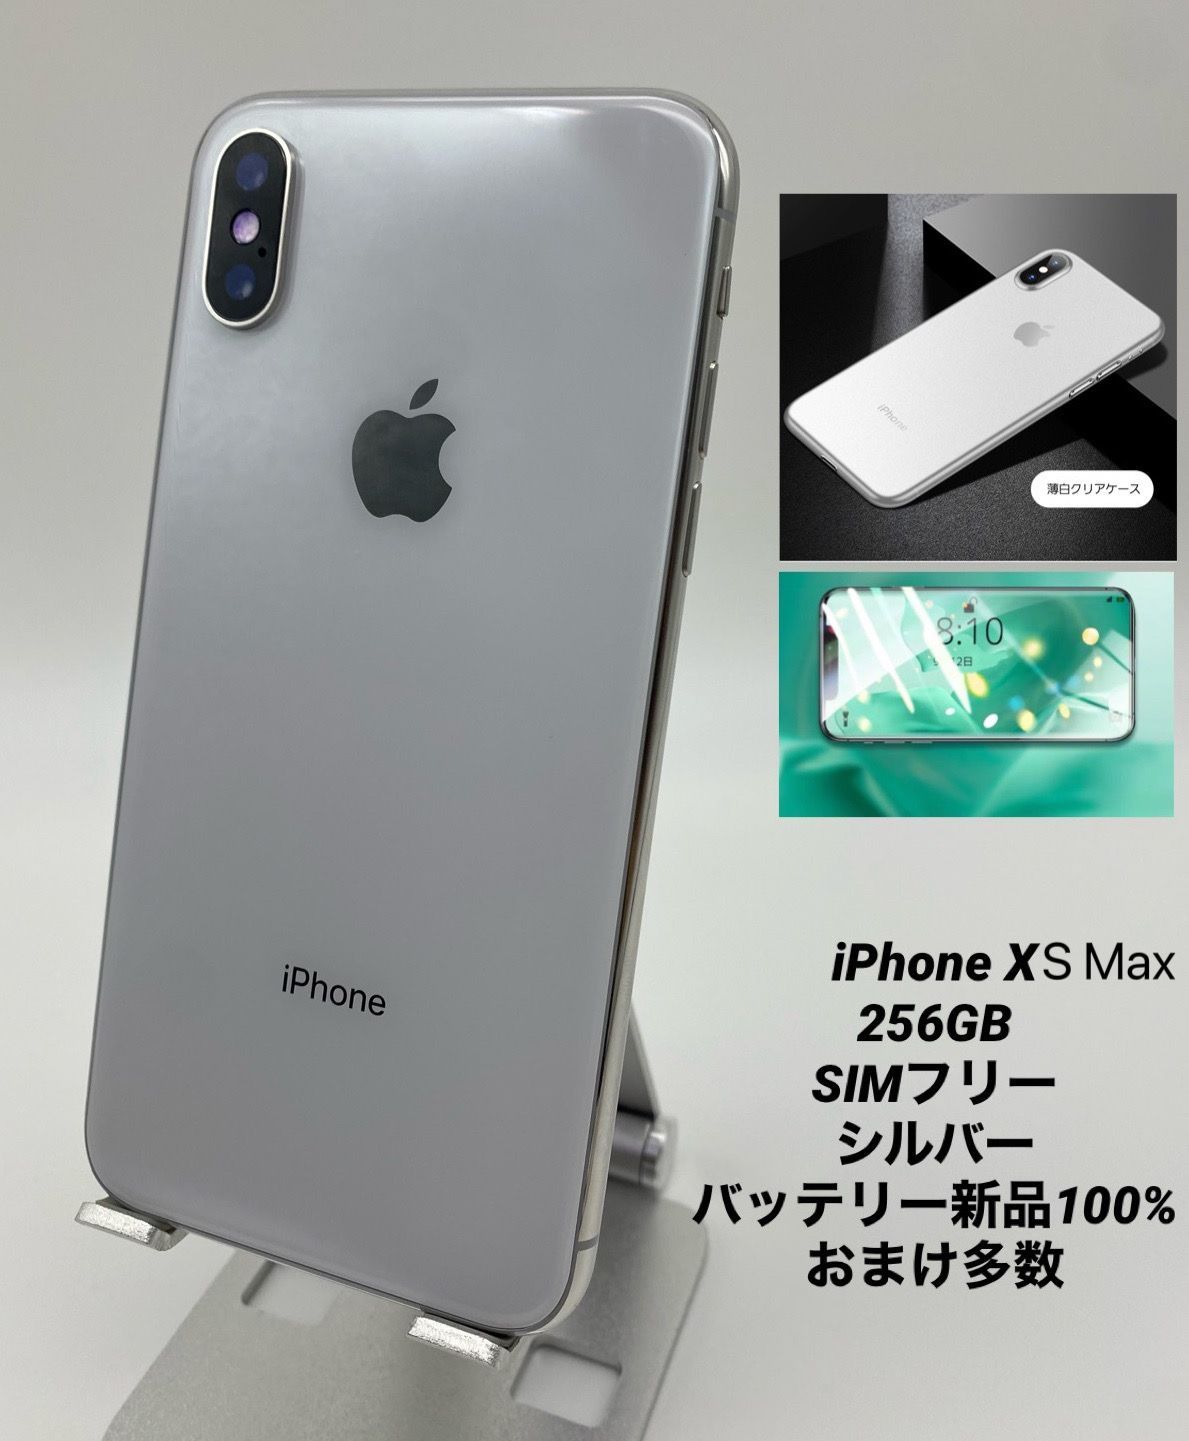 iPhone XS Max 256GB 【ホワイト】新品未使用バッテリー100%3万円は難しいです